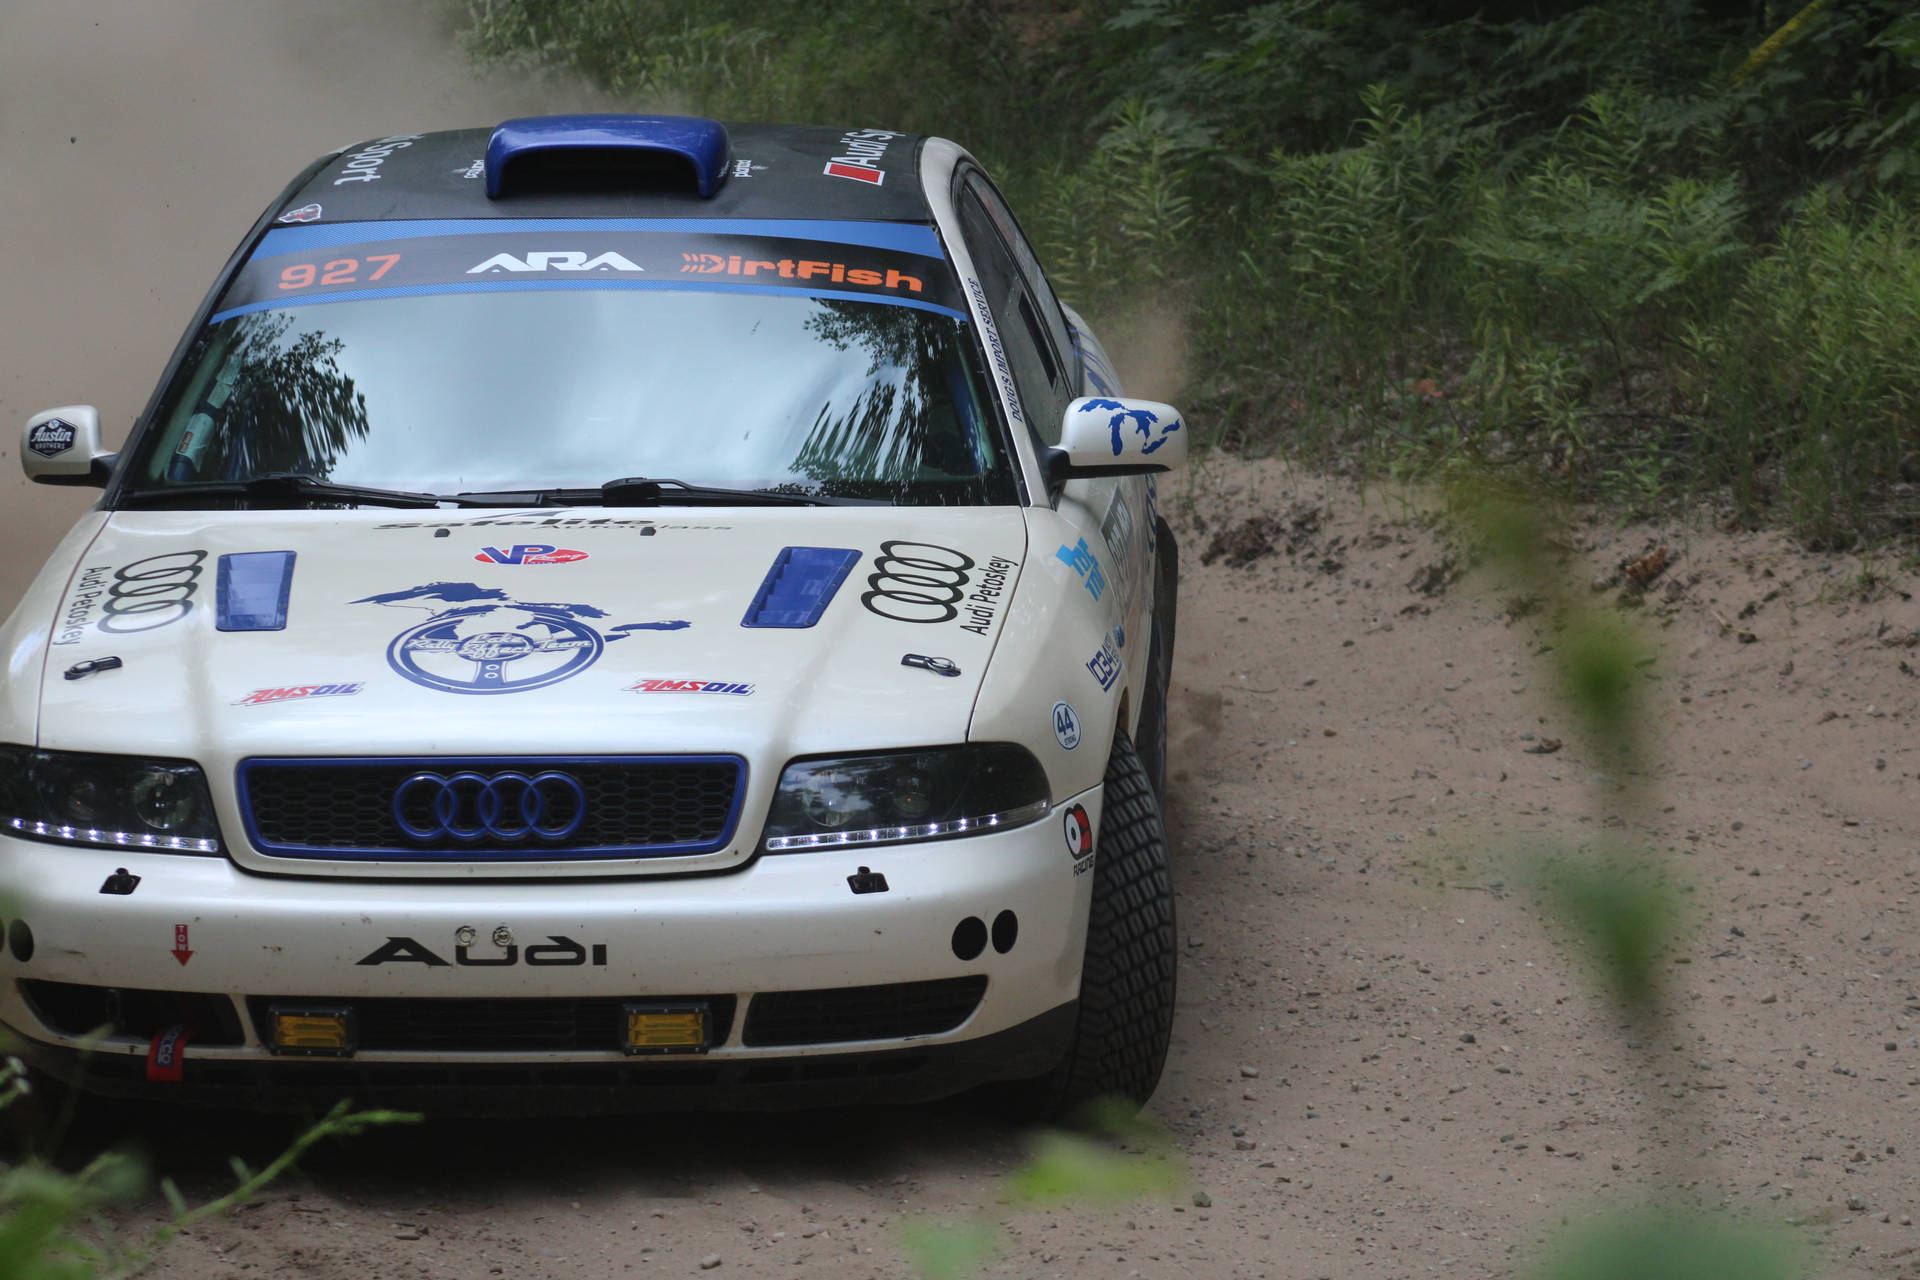 Audi A4 B5 Model Racing In Dirt Rally